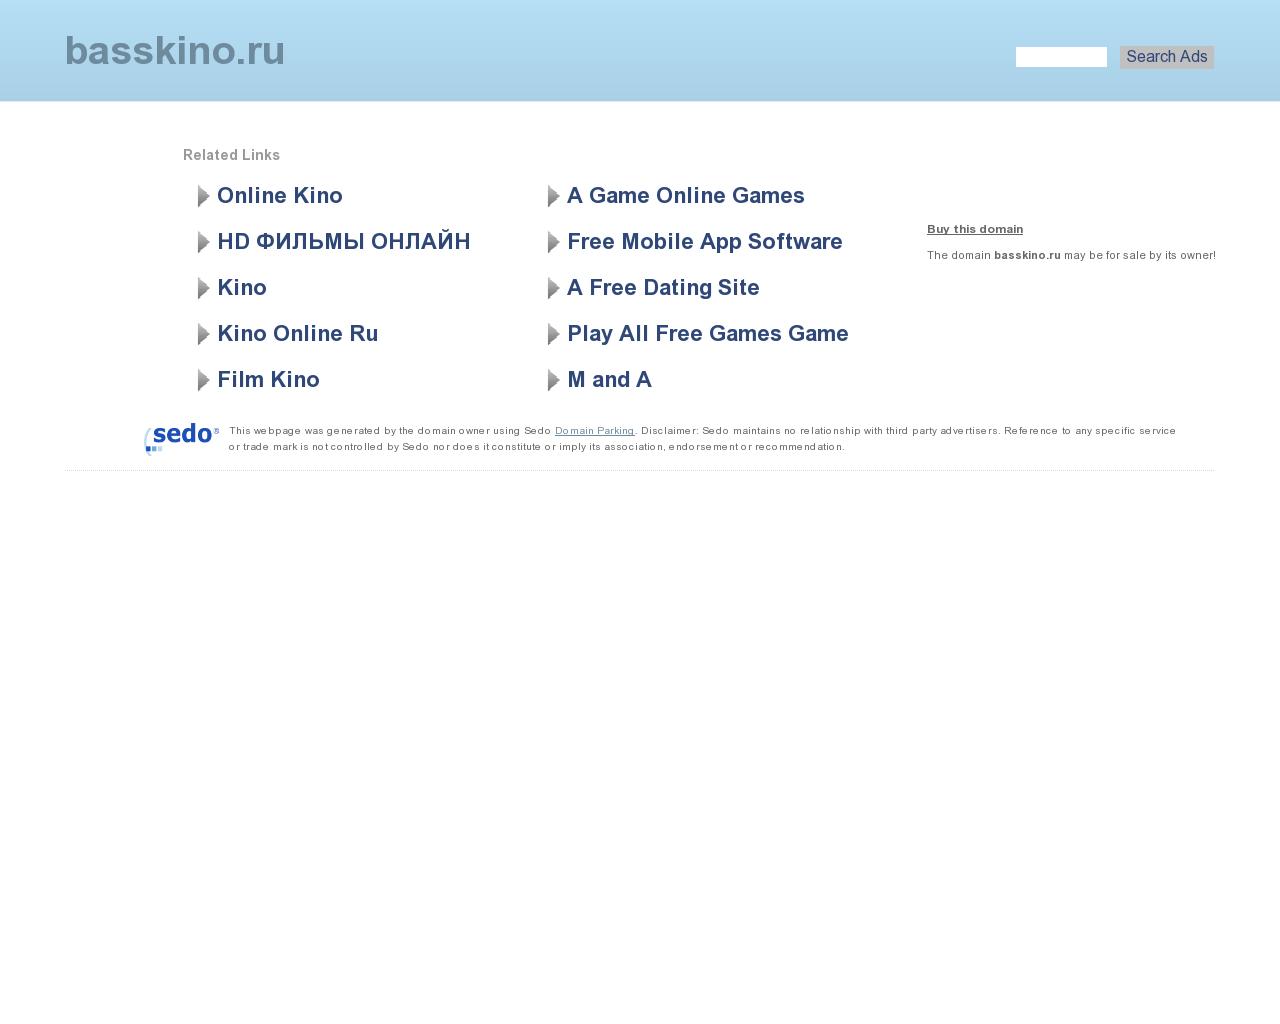 Изображение сайта basskino.ru в разрешении 1280x1024